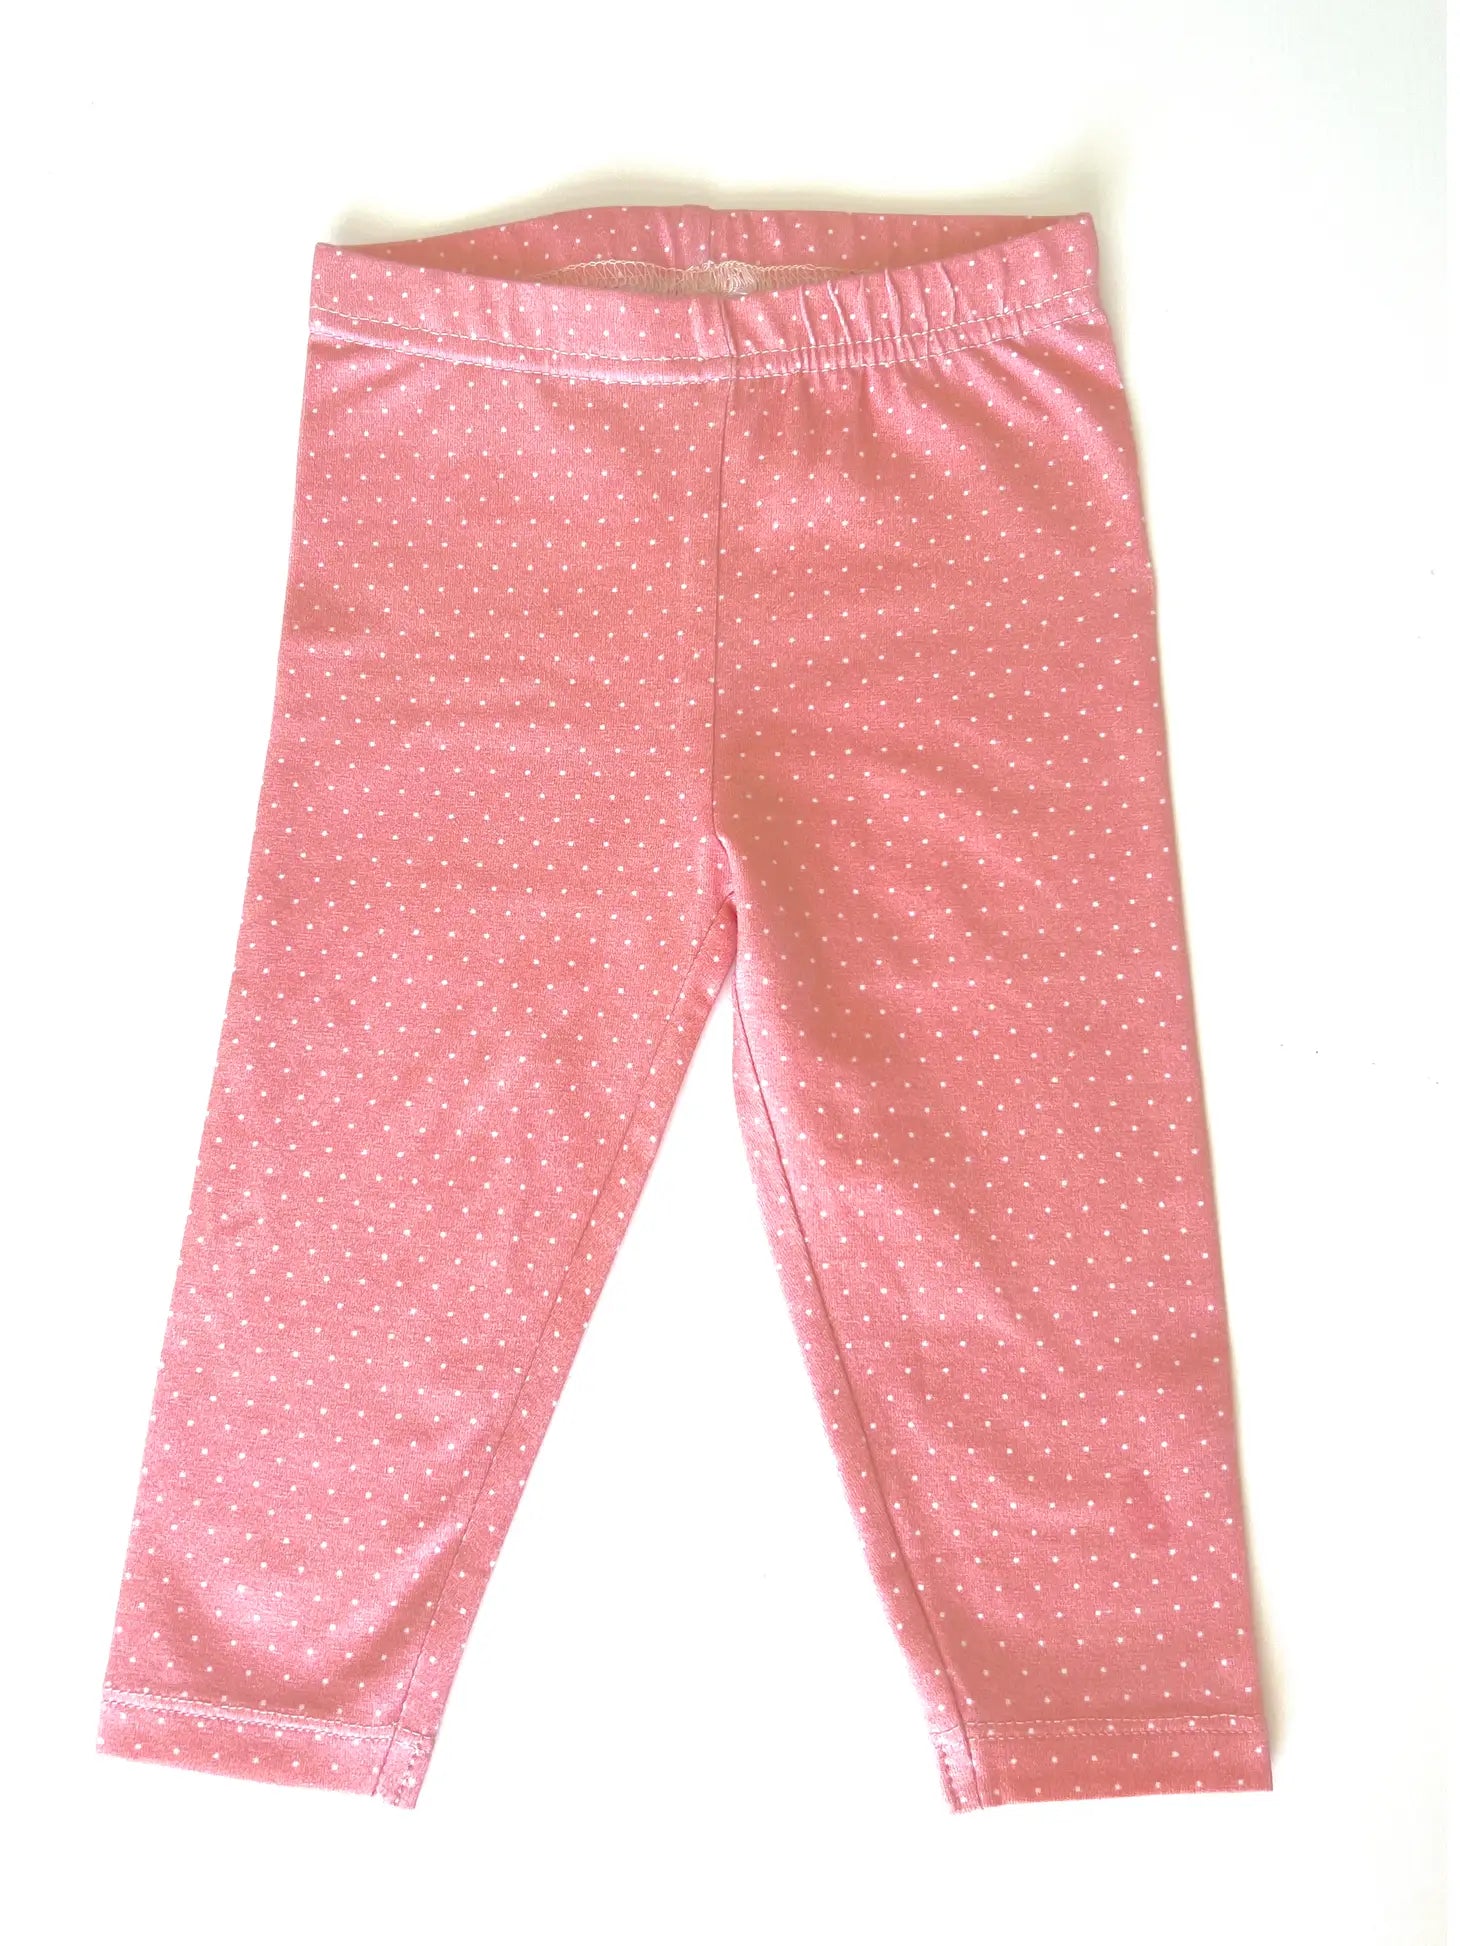 viverano organic cotton pink polka dot leggings baby pants 